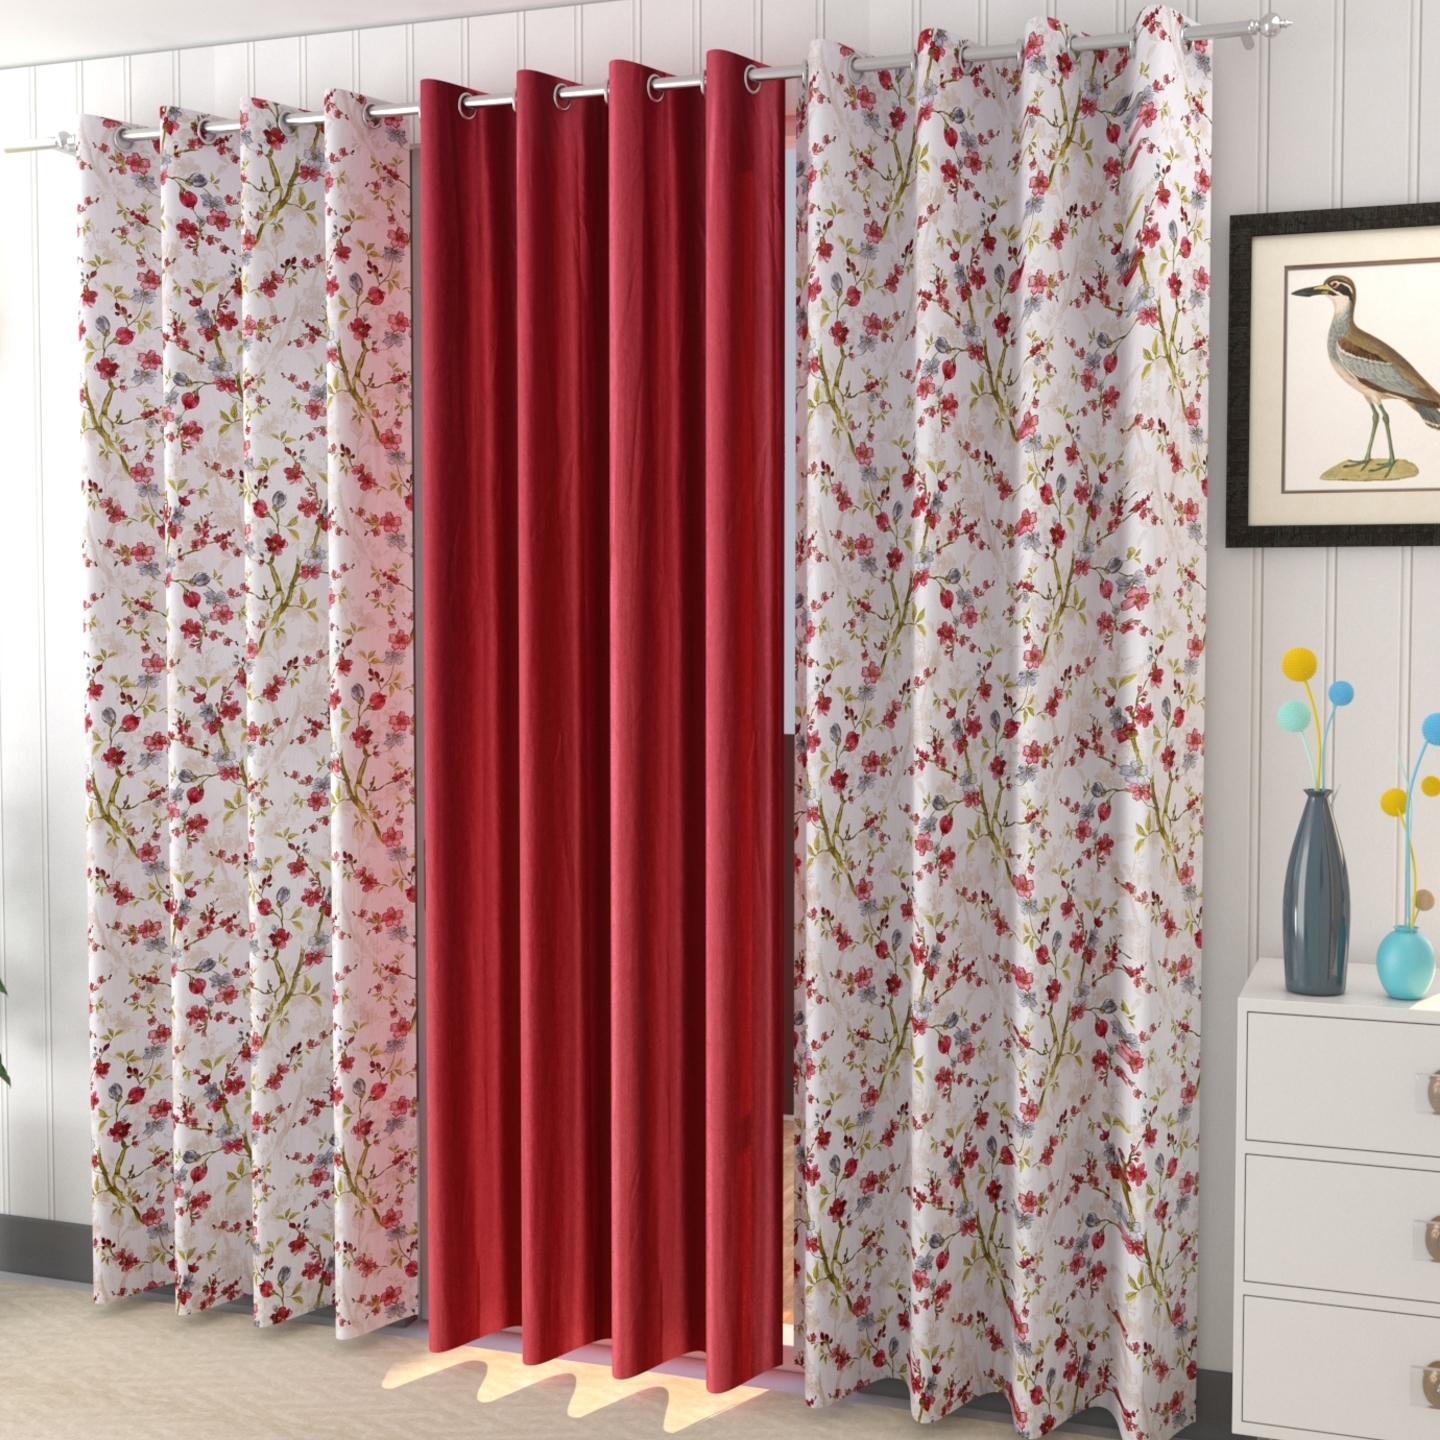 Handtex Home Polyester Digital Print Eyelet Curtain Set of 3 Pcs 4feet x 9feet Maroon